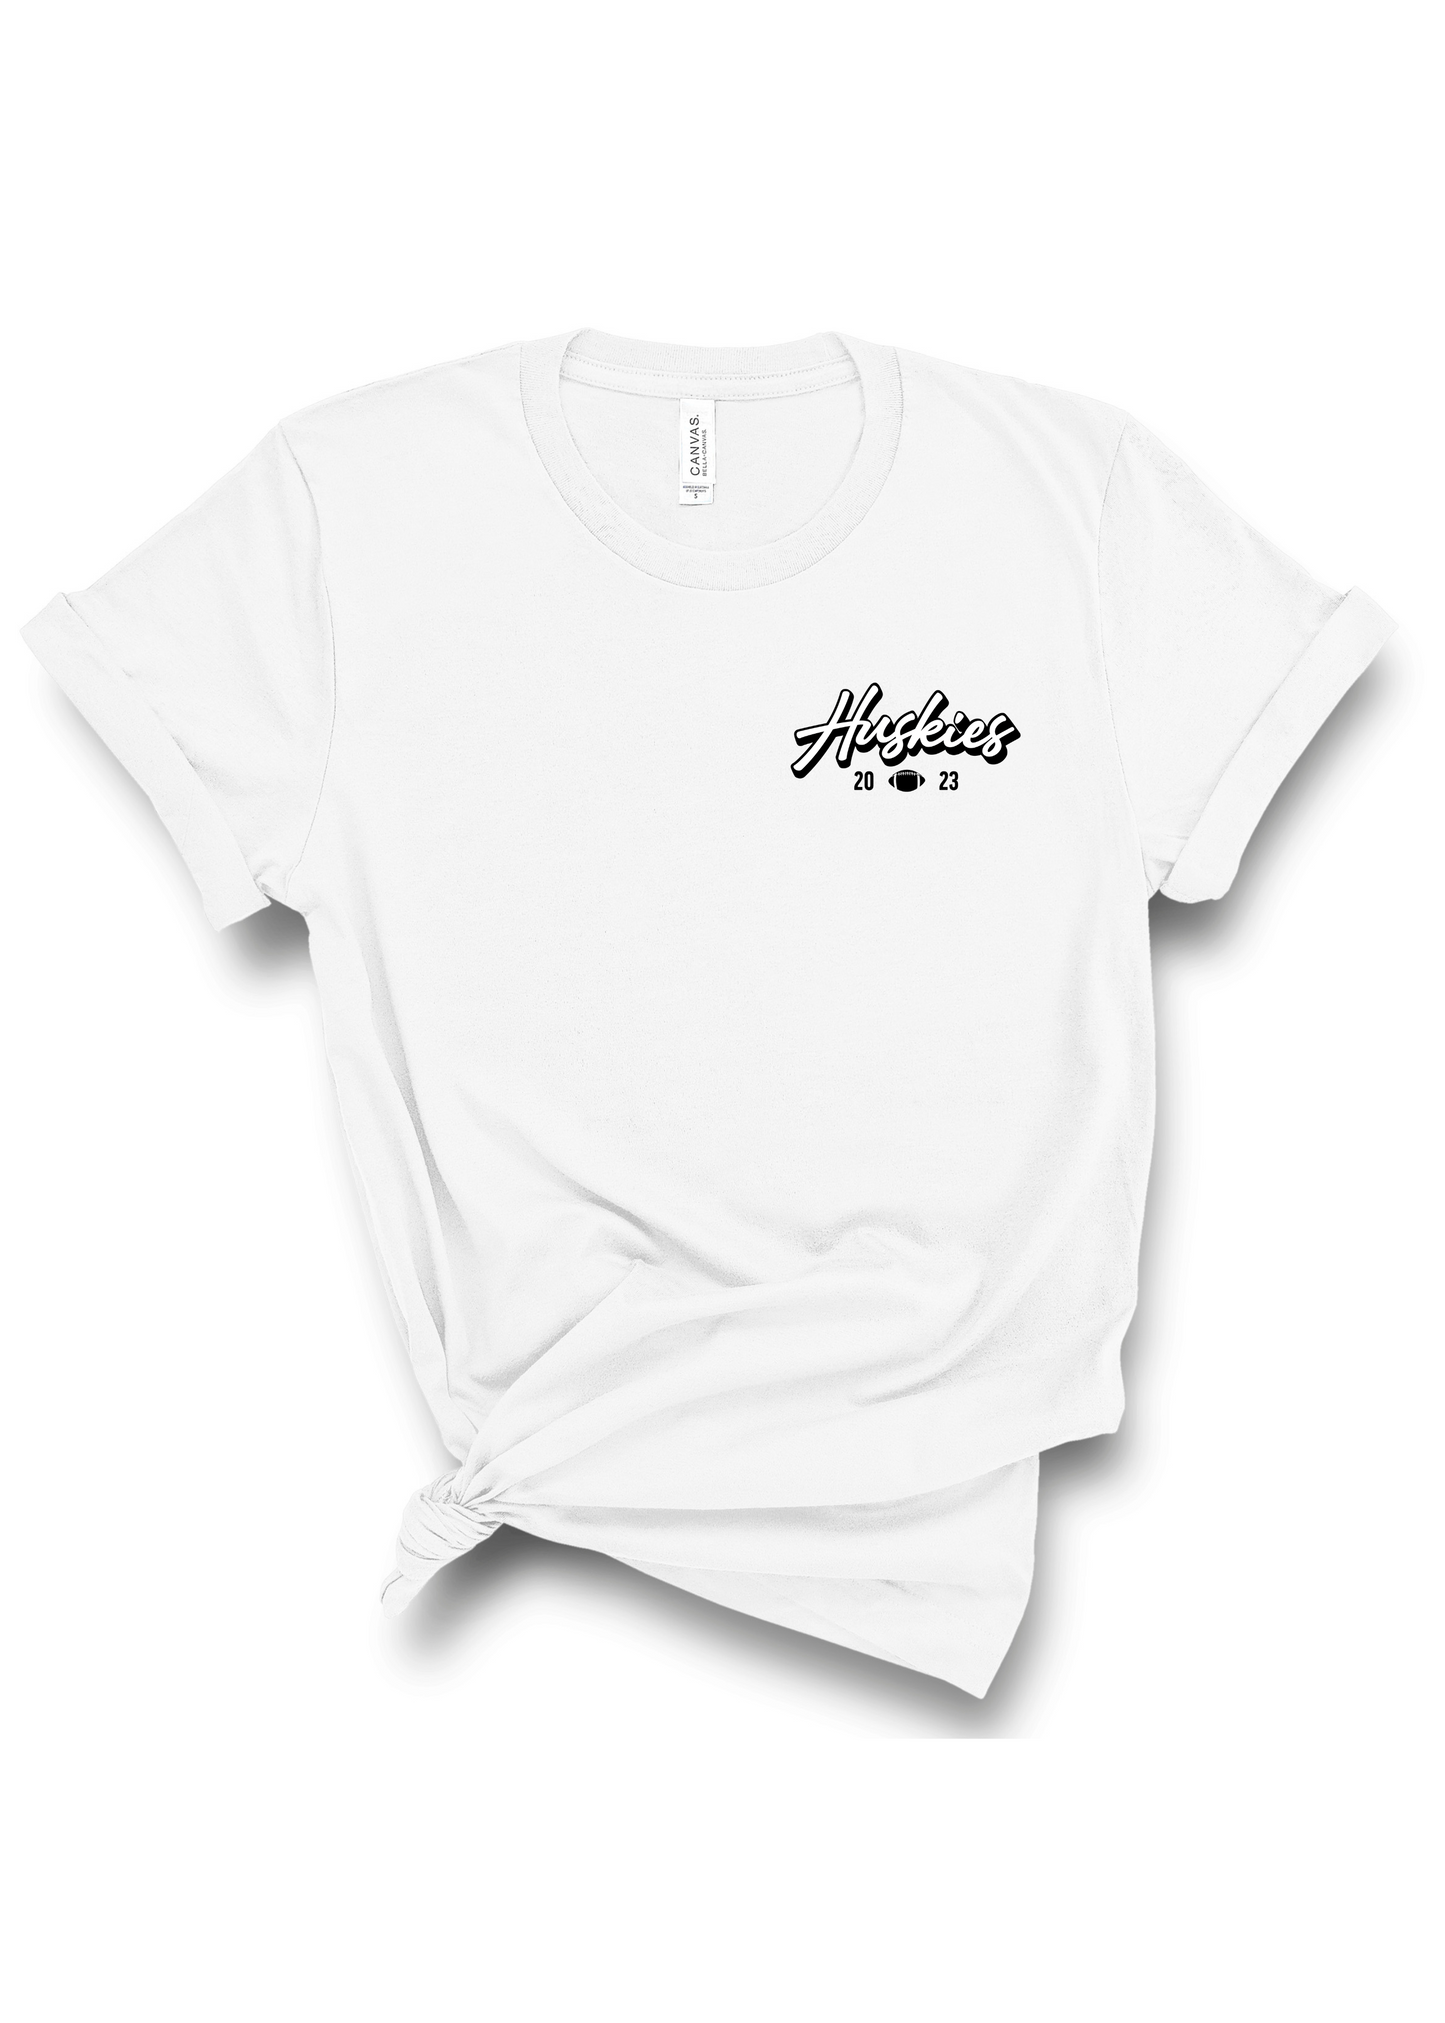 Huskies Stadium | Kids Tee-Kids Tees-Sister Shirts-Sister Shirts, Cute & Custom Tees for Mama & Littles in Trussville, Alabama.